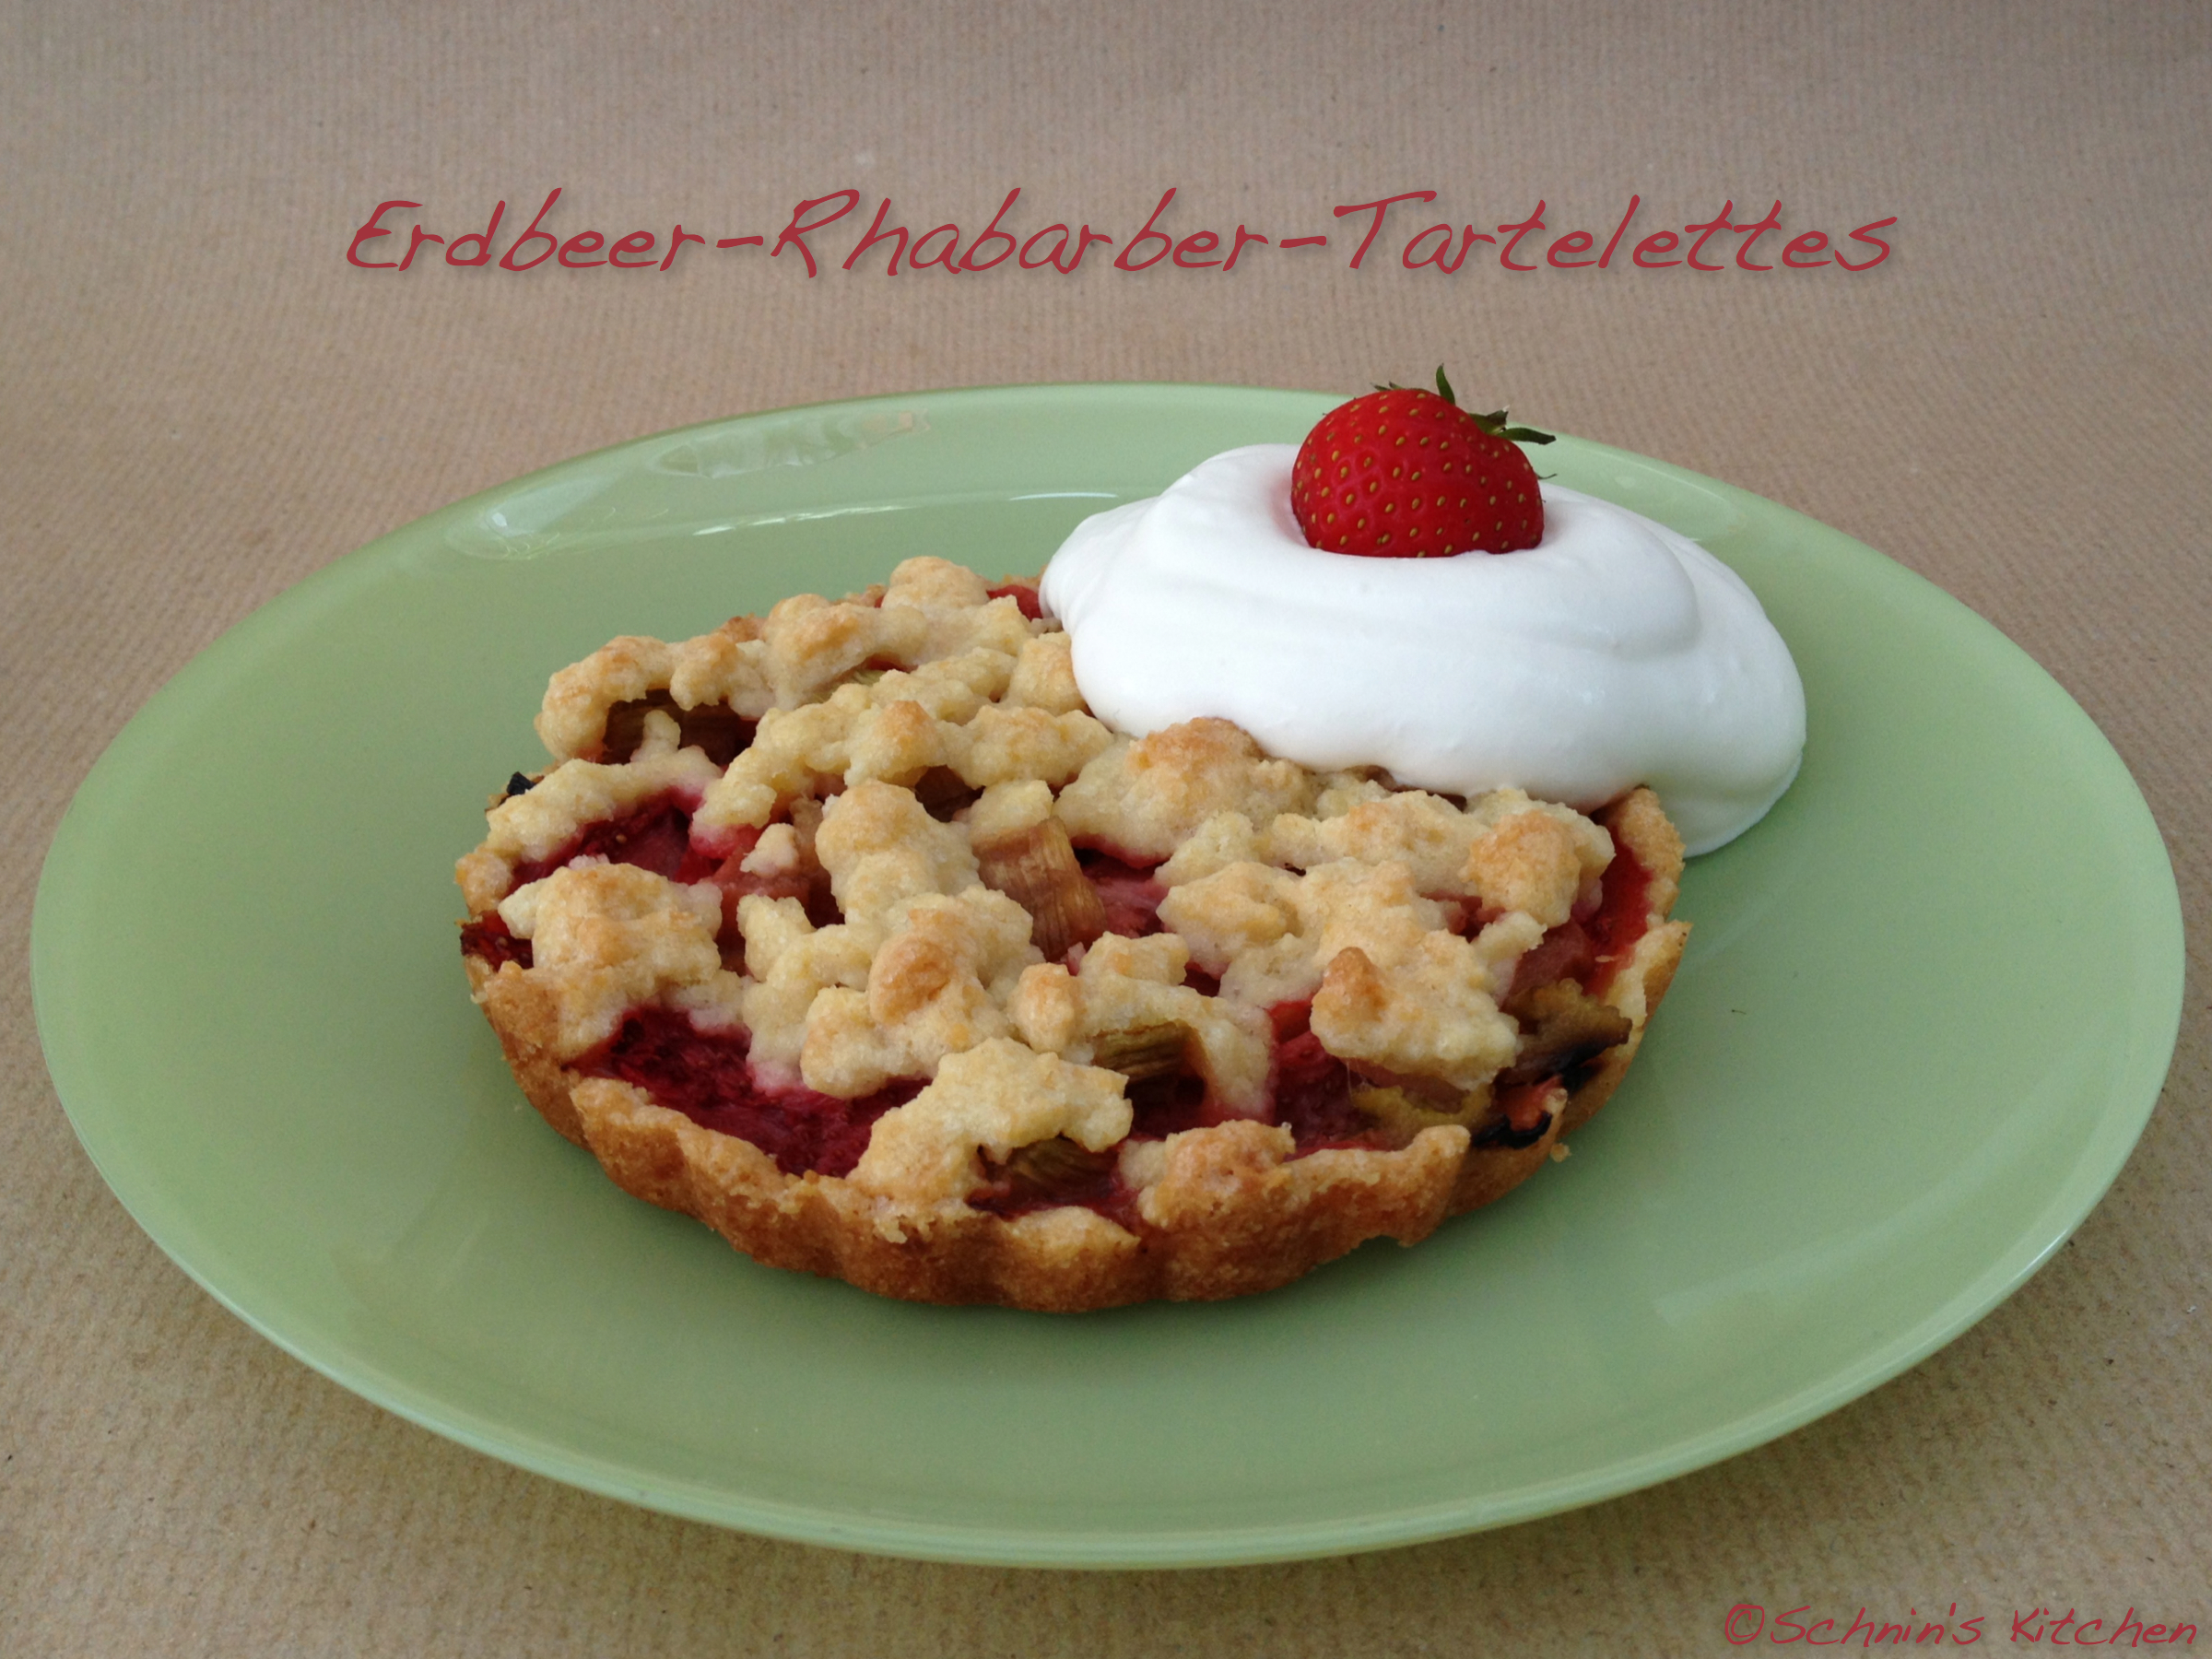 Schnin's Kitchen: Erdbeer-Rhabarber-Tartelettes